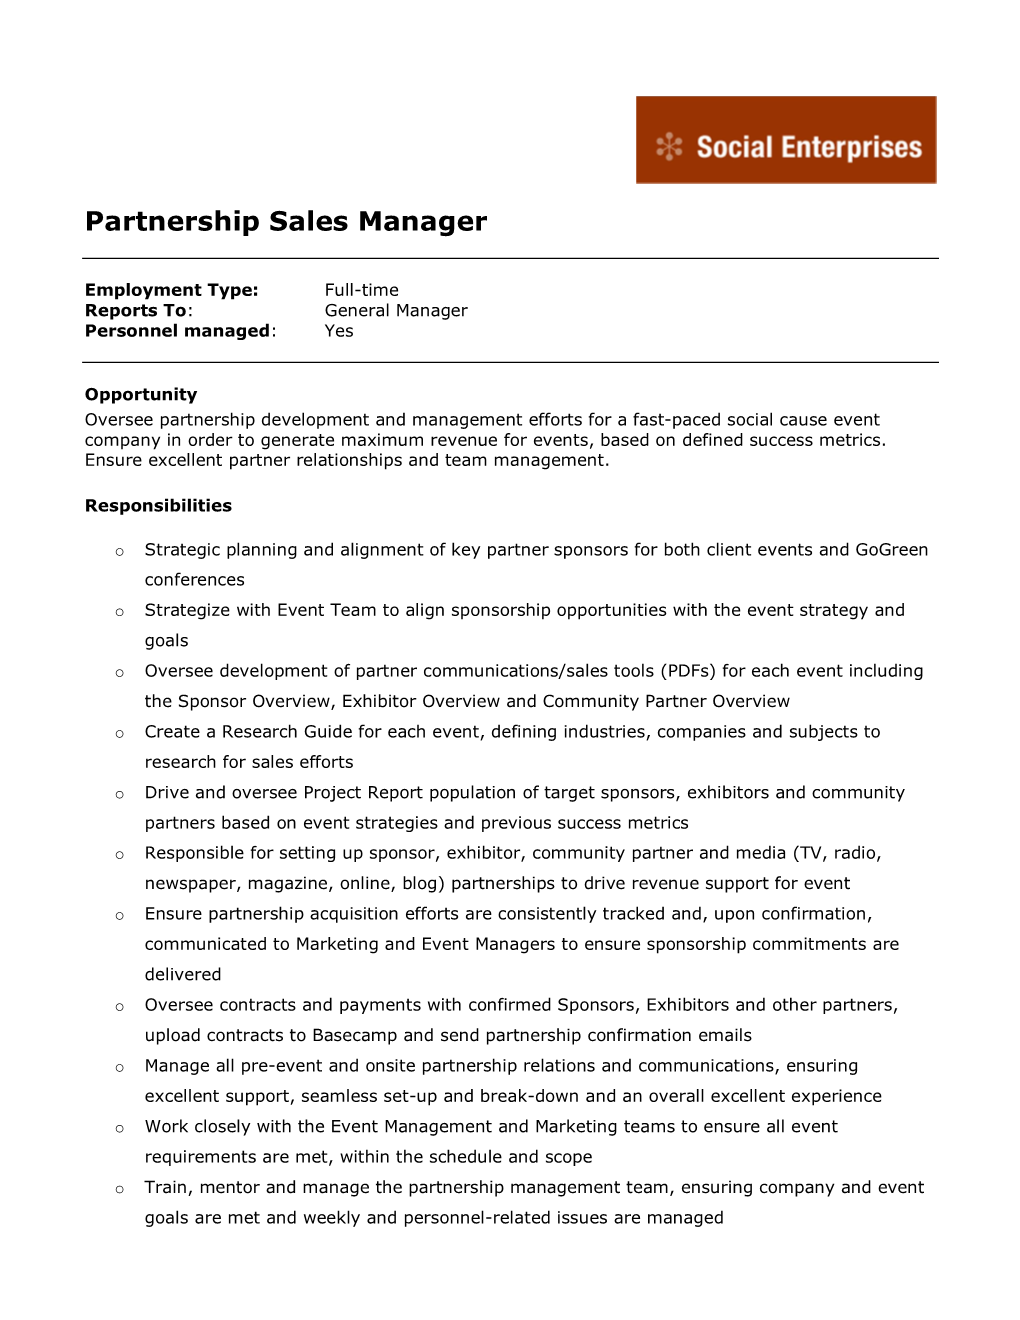 Partnership Sales Manager